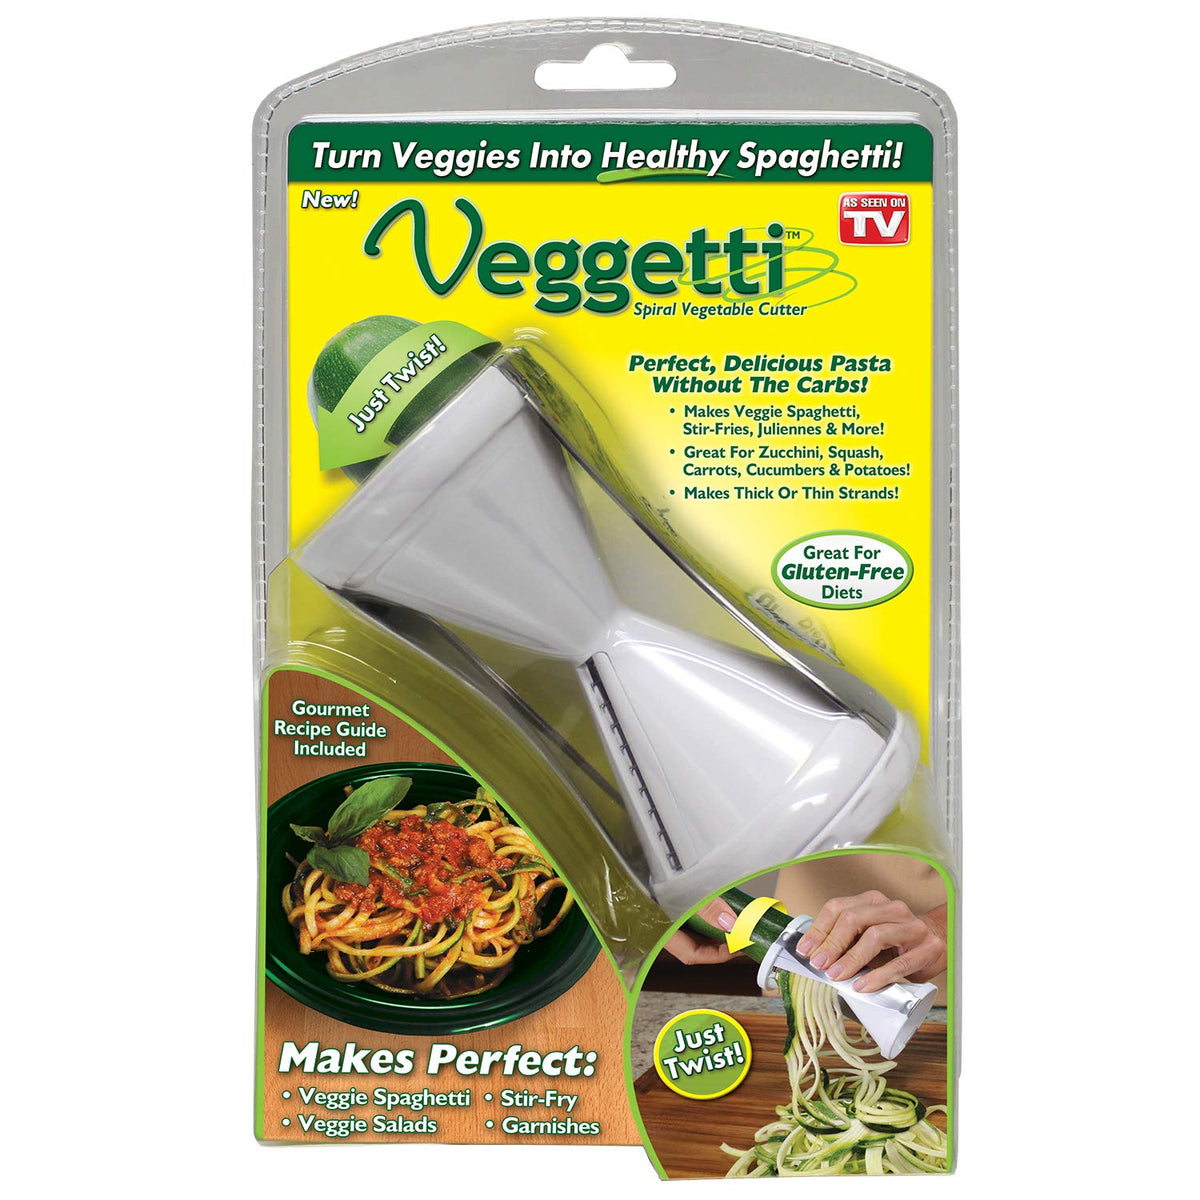 Voaesdk Handheld Spiralizer Vegetable Slicer,4 in 1 Heavy Duty